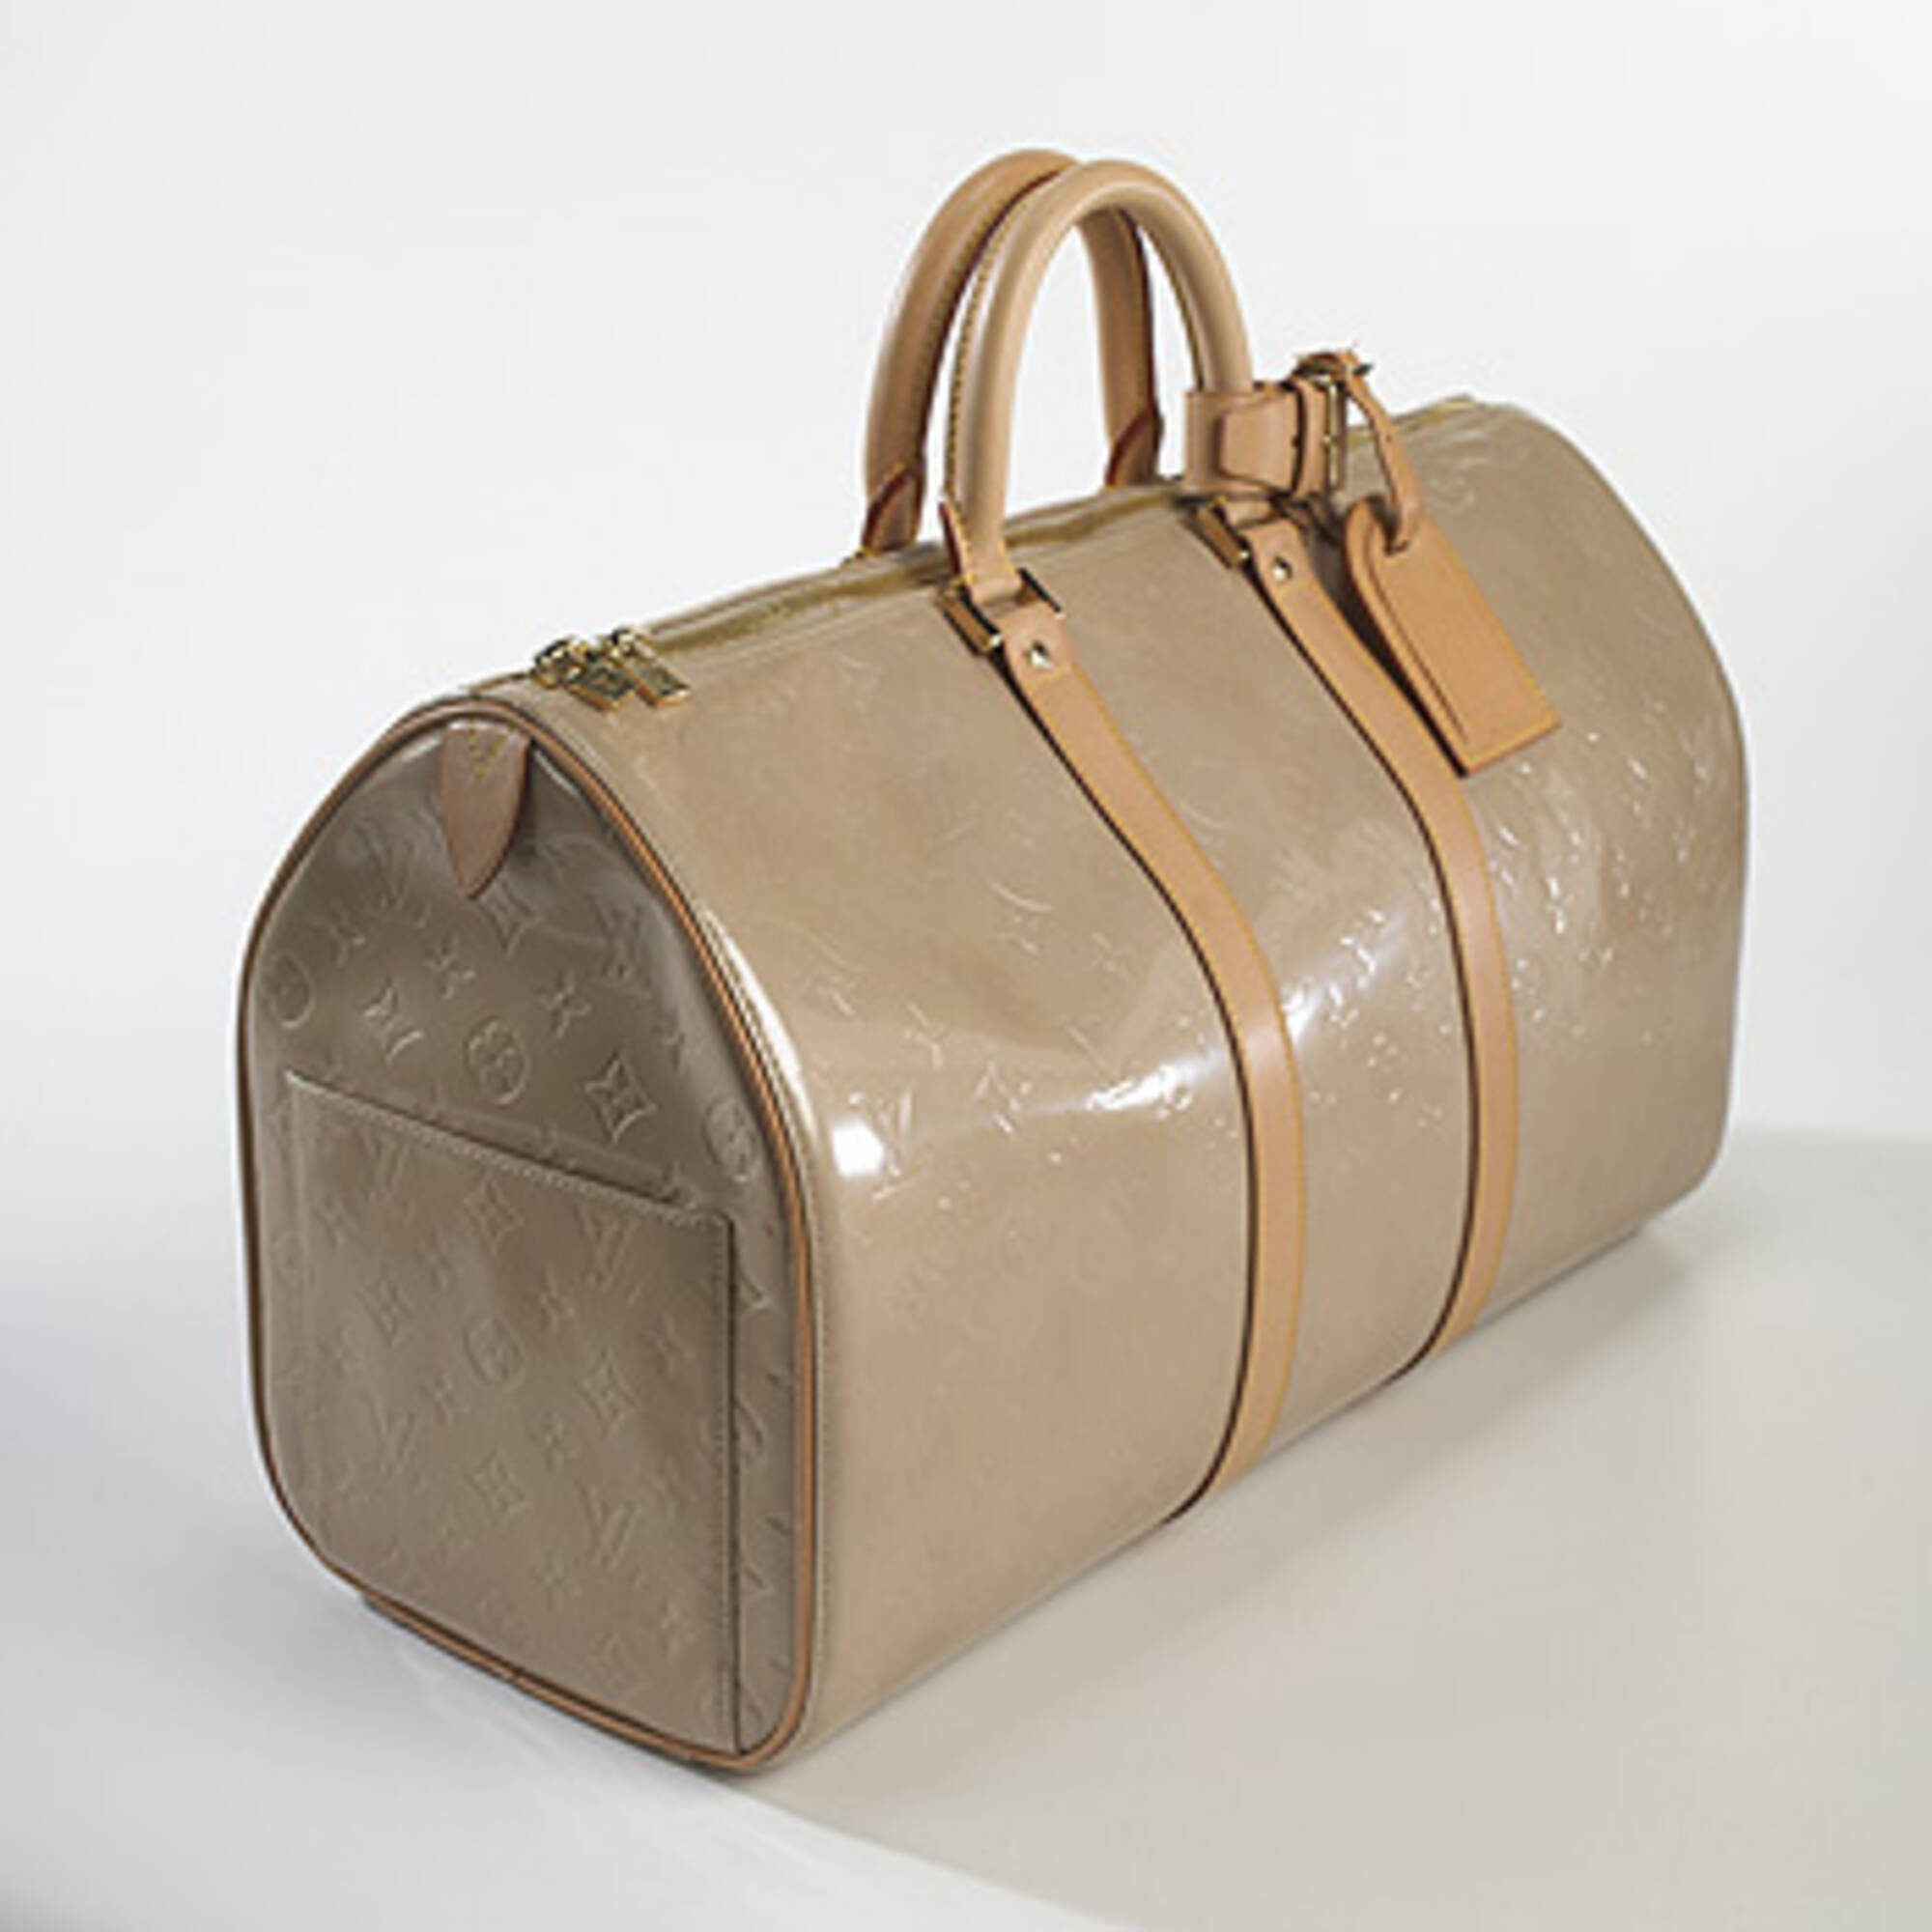 Sold at Auction: A Louis Vuitton Sports Bag